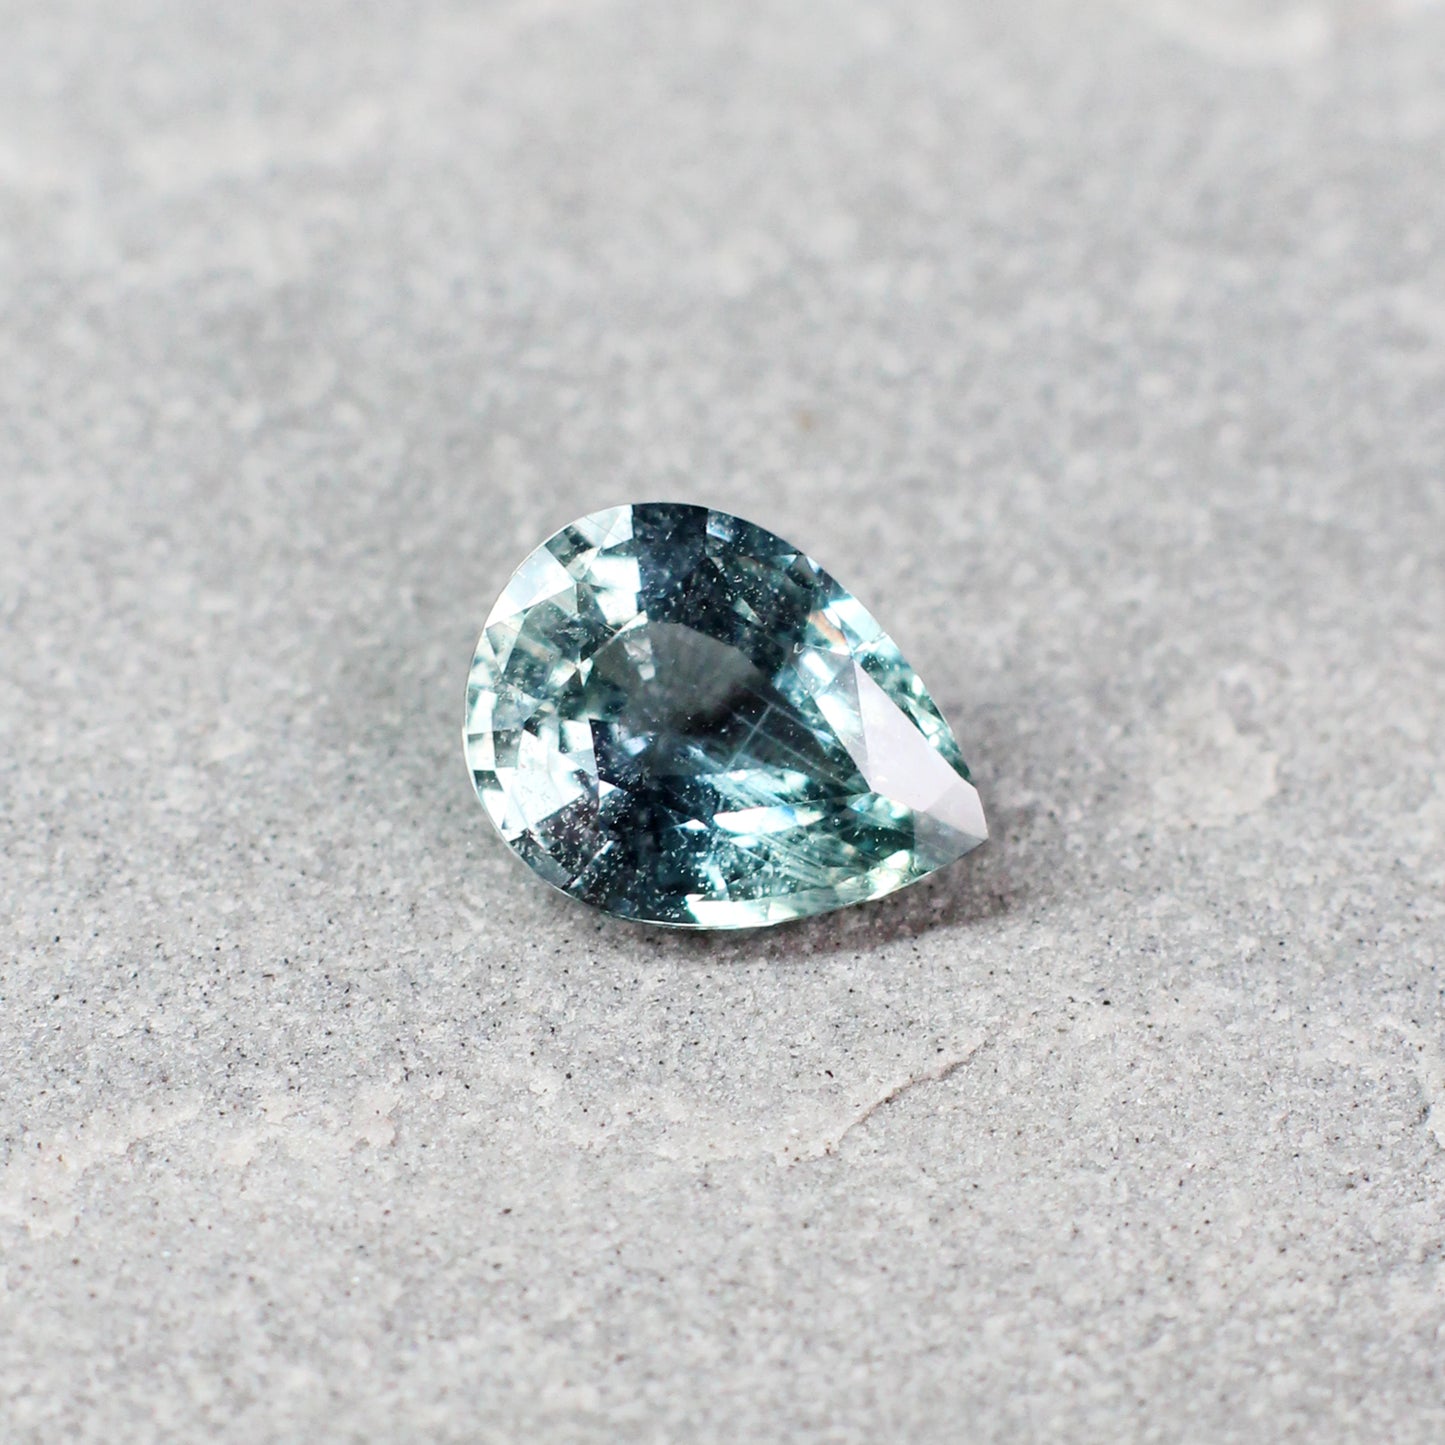 2.42ct Greenish Blue, Pear Shape Sapphire, Heated, Madagascar - 9.70 x 7.46 x 4.38mm